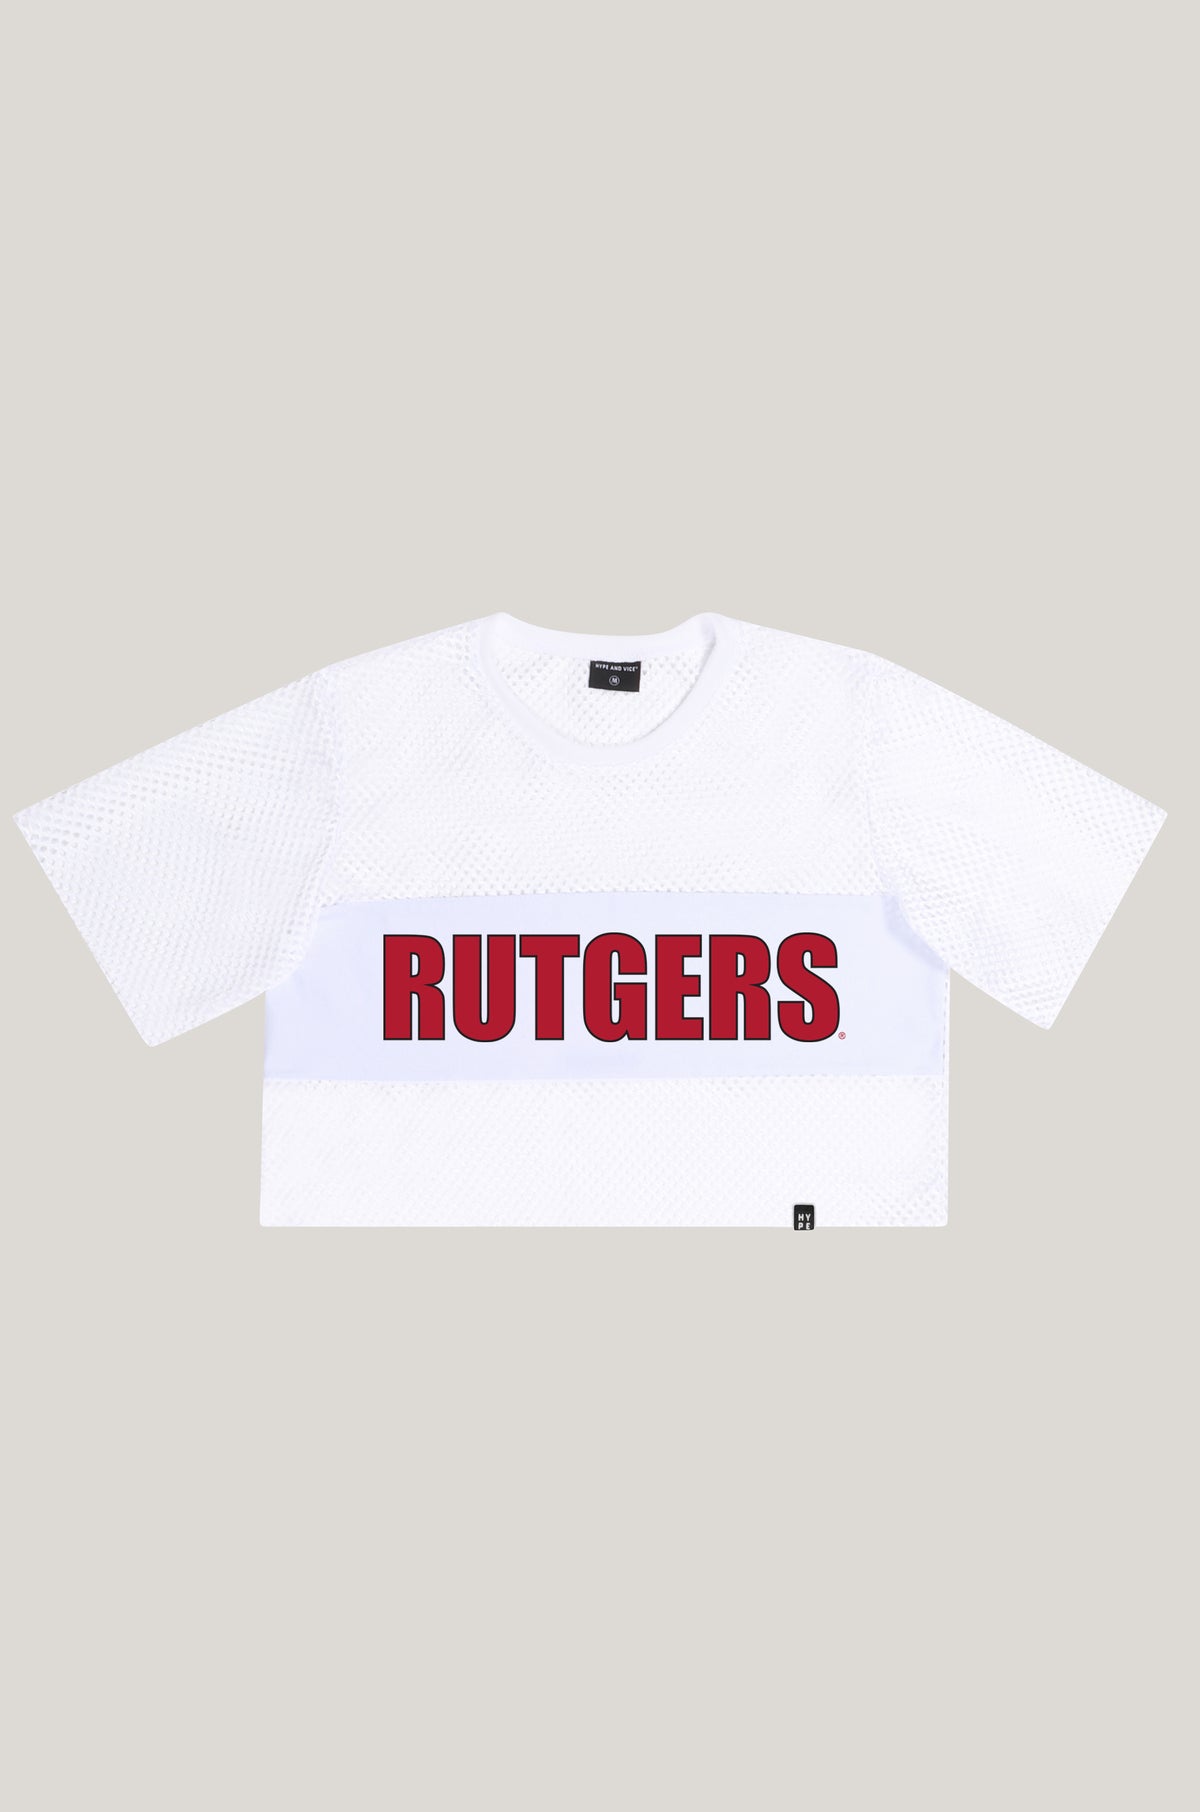 Rutgers Mesh Tee